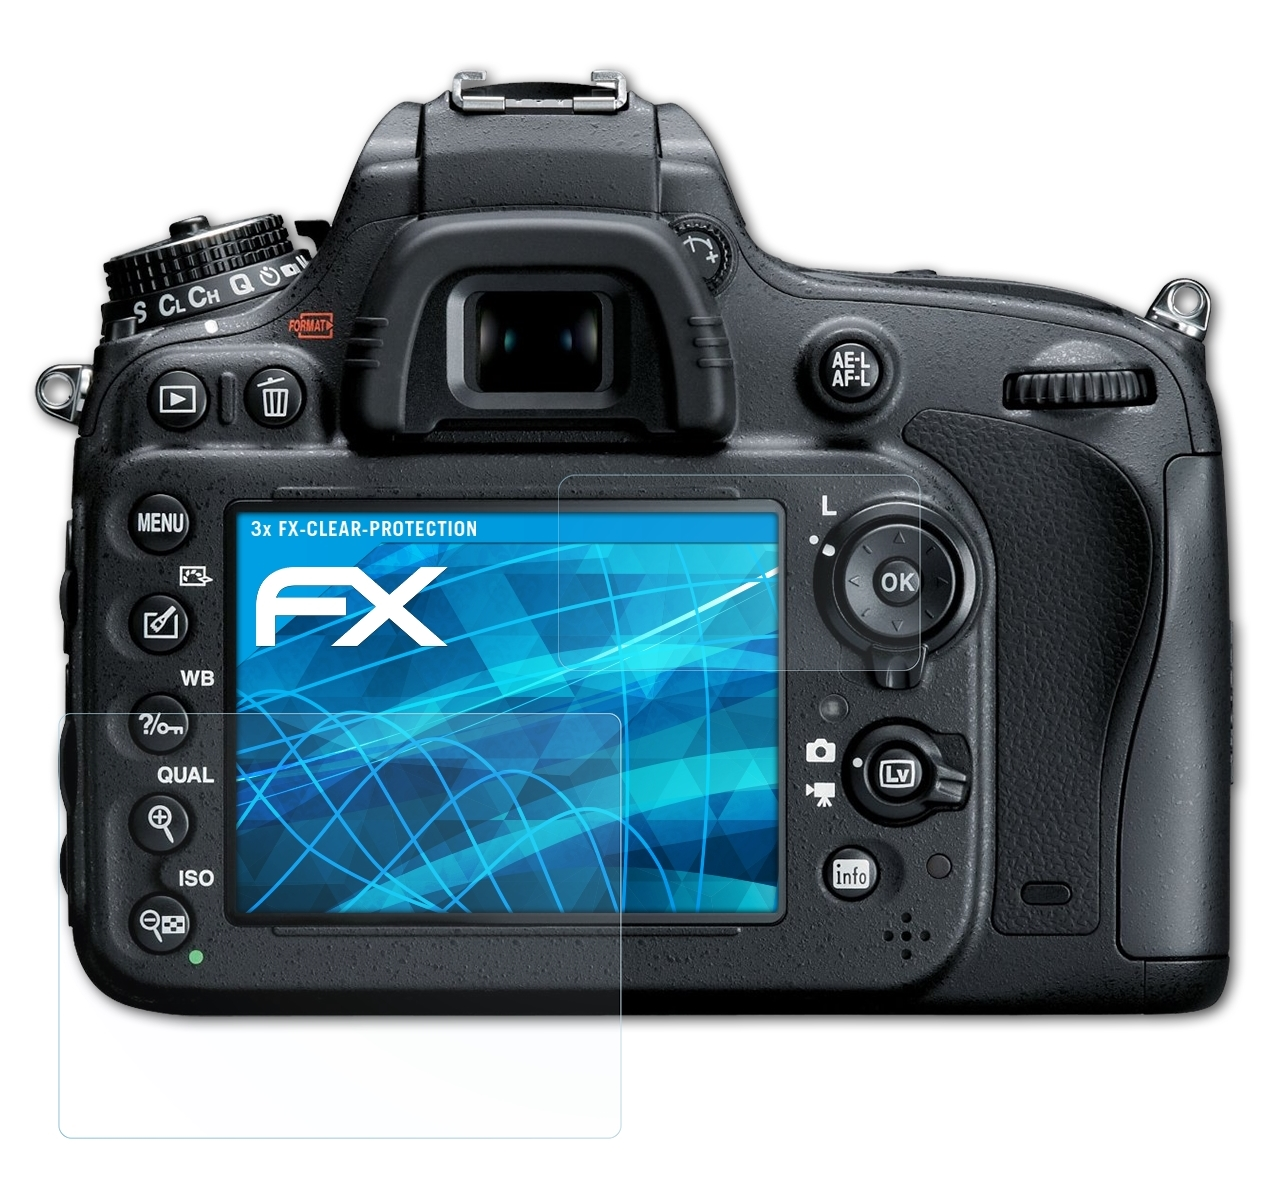 ATFOLIX 3x Displayschutz(für FX-Clear D600) Nikon